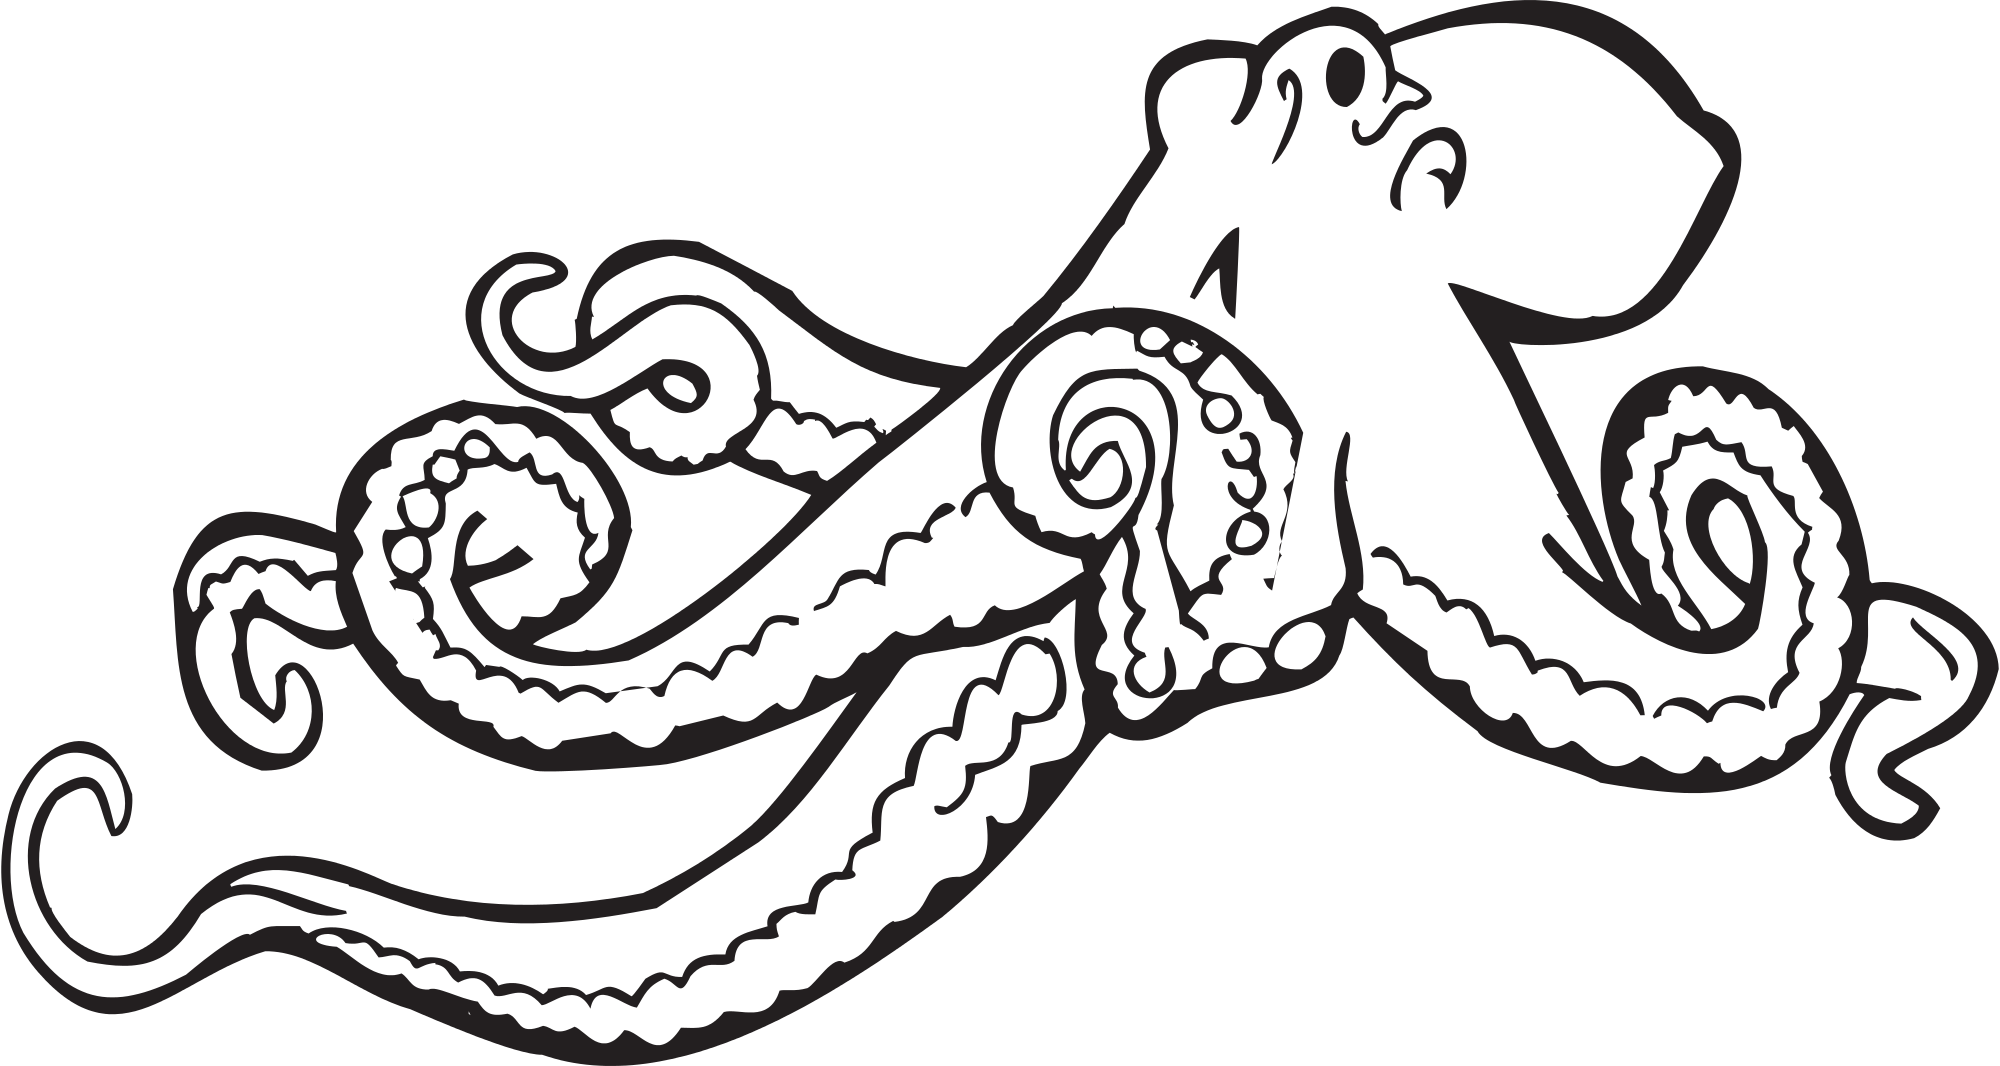 Octopus clipart illustrations.